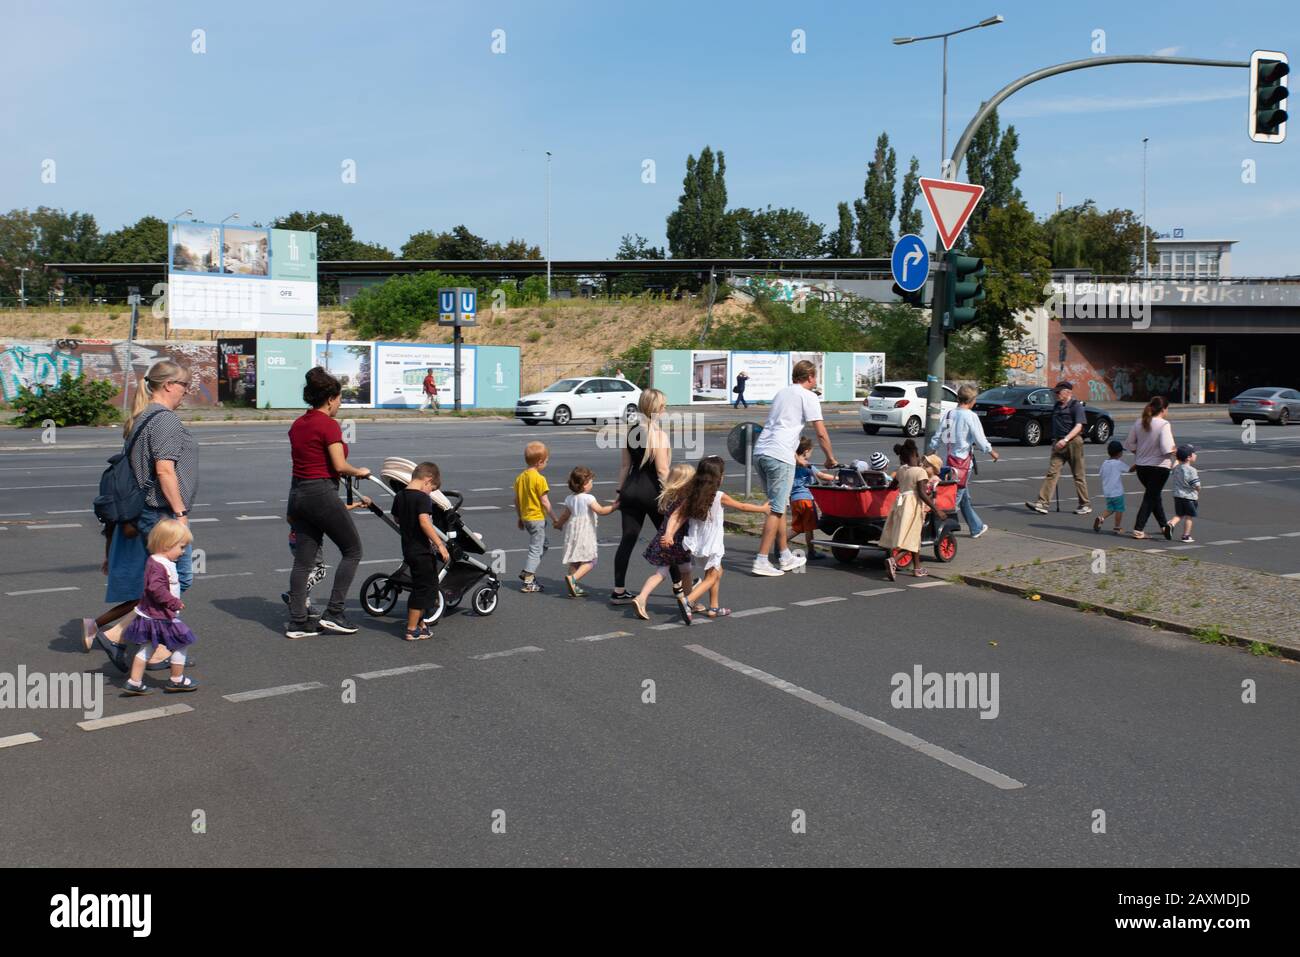 Group of children with adults, summer, Berlin, Germany. Un groupe d'enfants avec des adultes traversent une rue à Berlin, Allemagne. Stock Photo